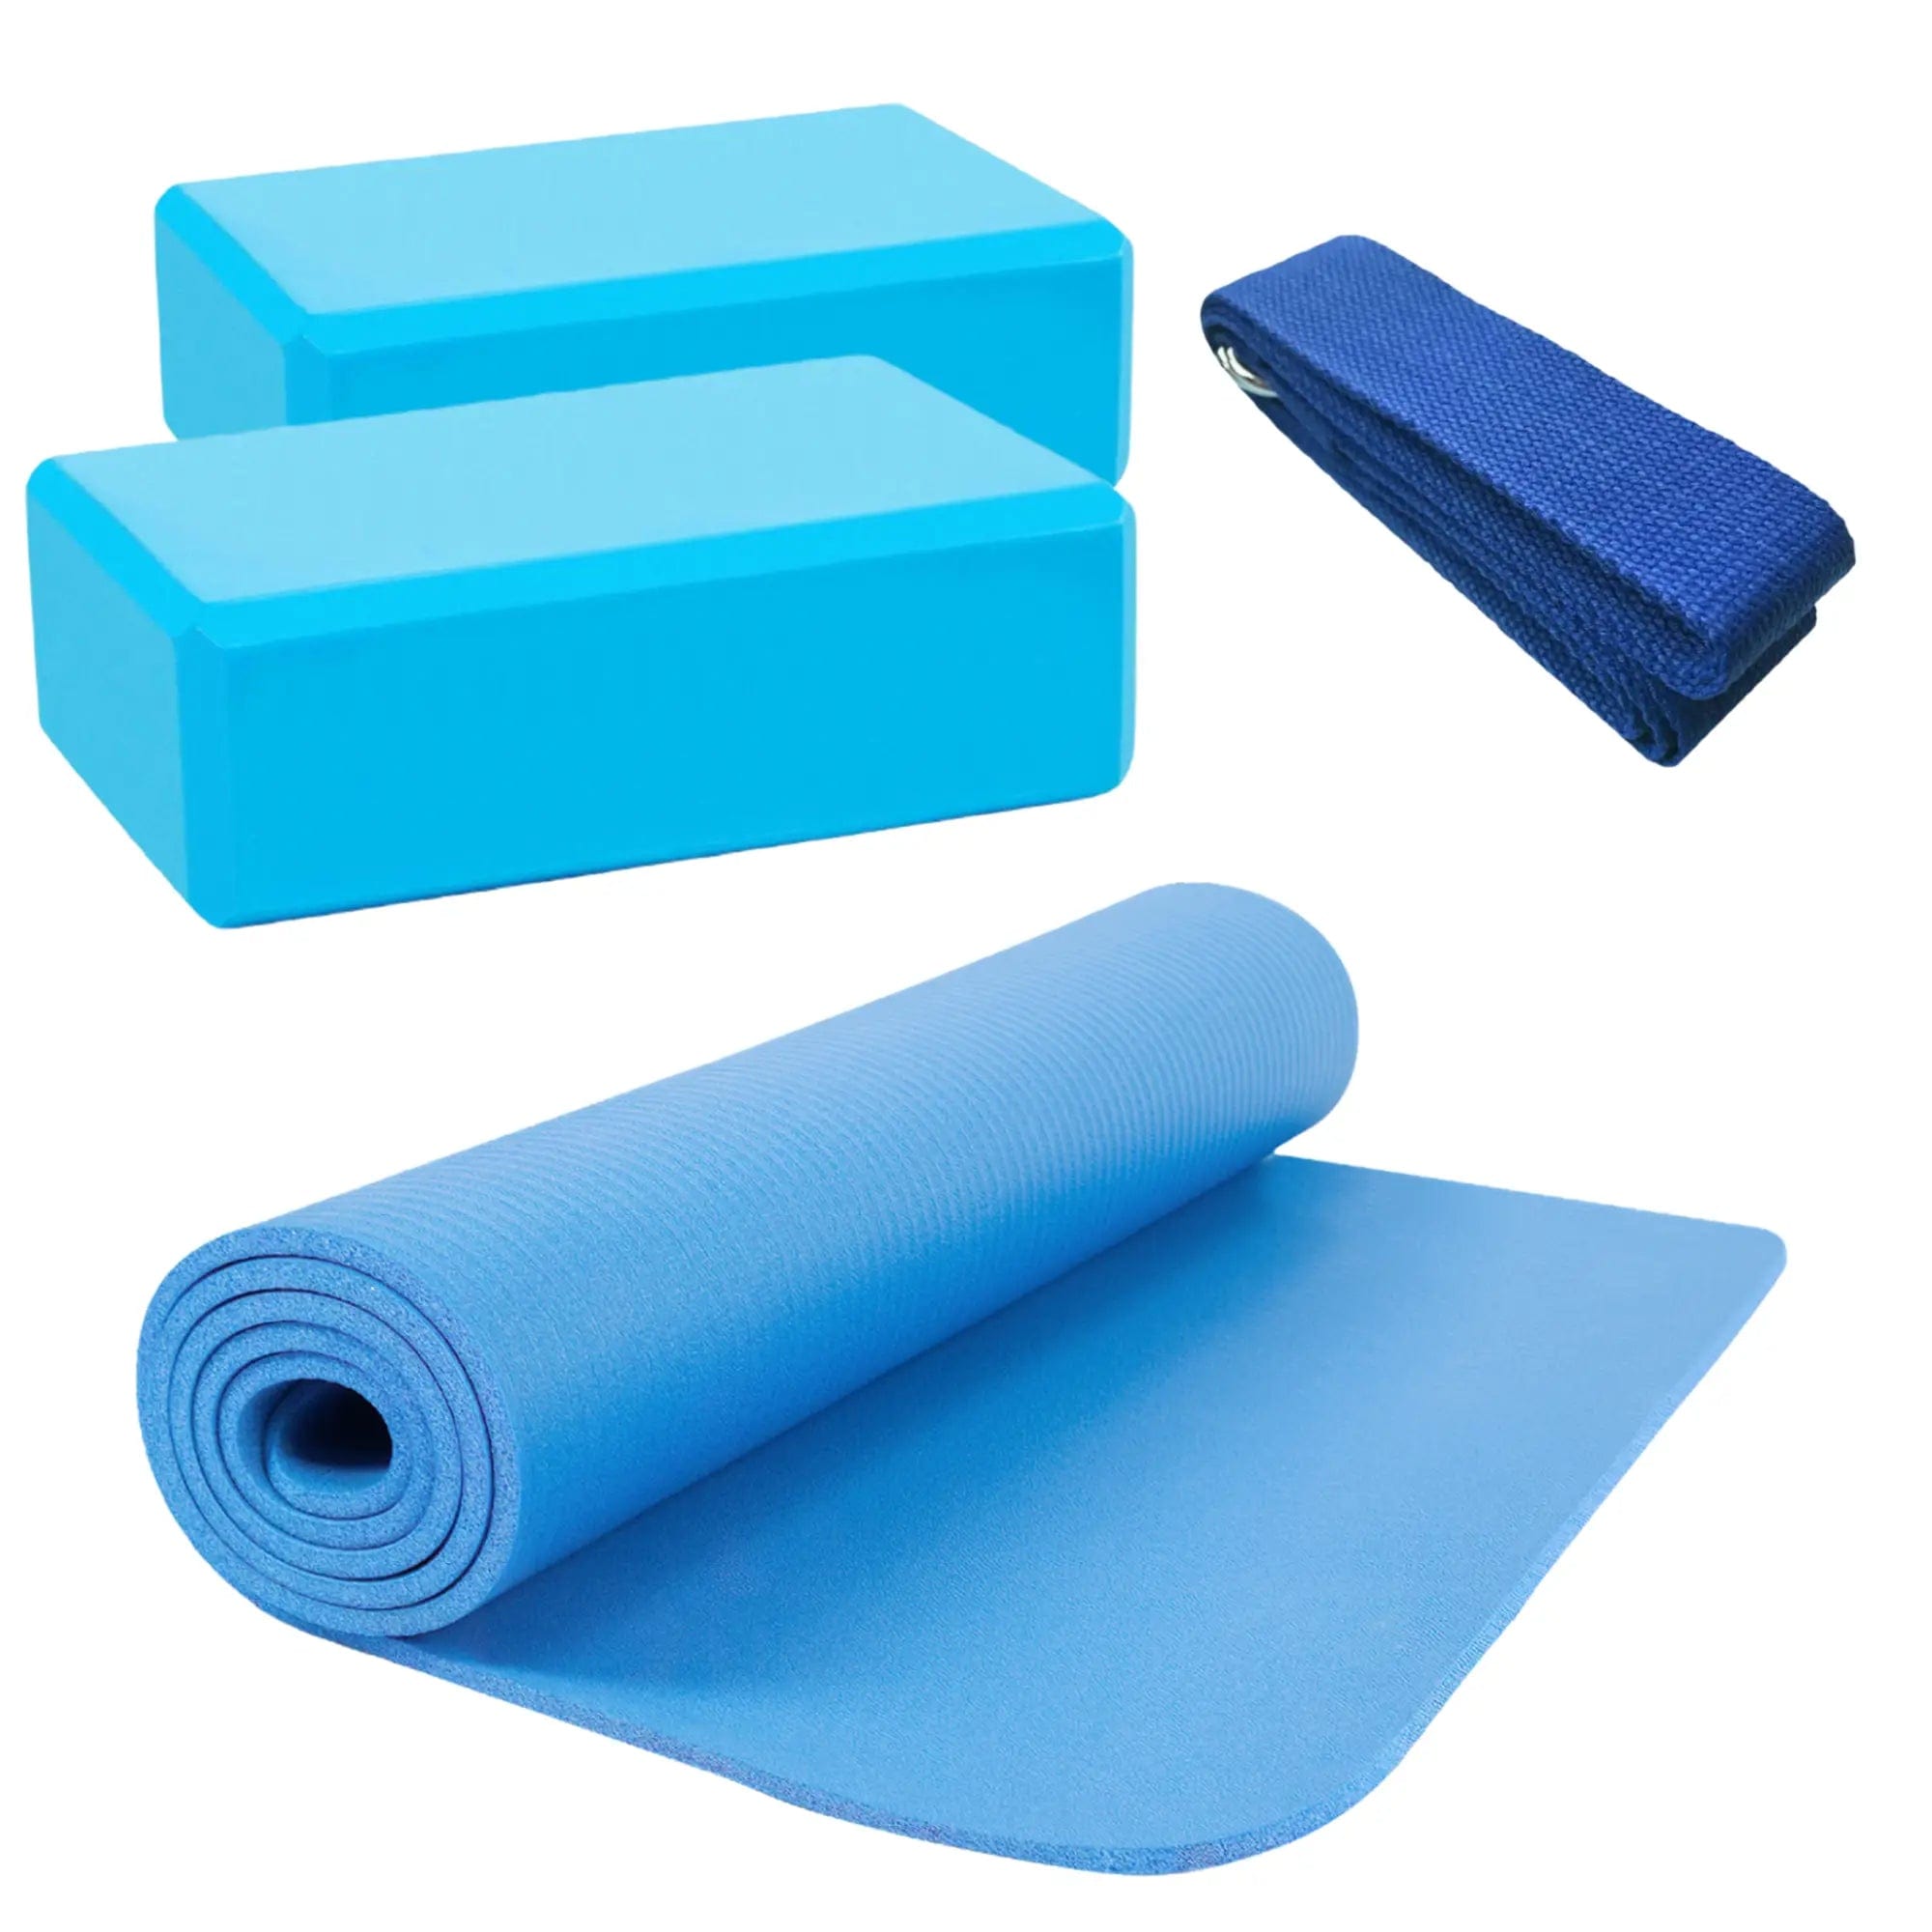 HighPowered Yoga Set (1x Yogamatte, 2x Block, 1x Strap) Blau kaufen bei HighPowered.ch